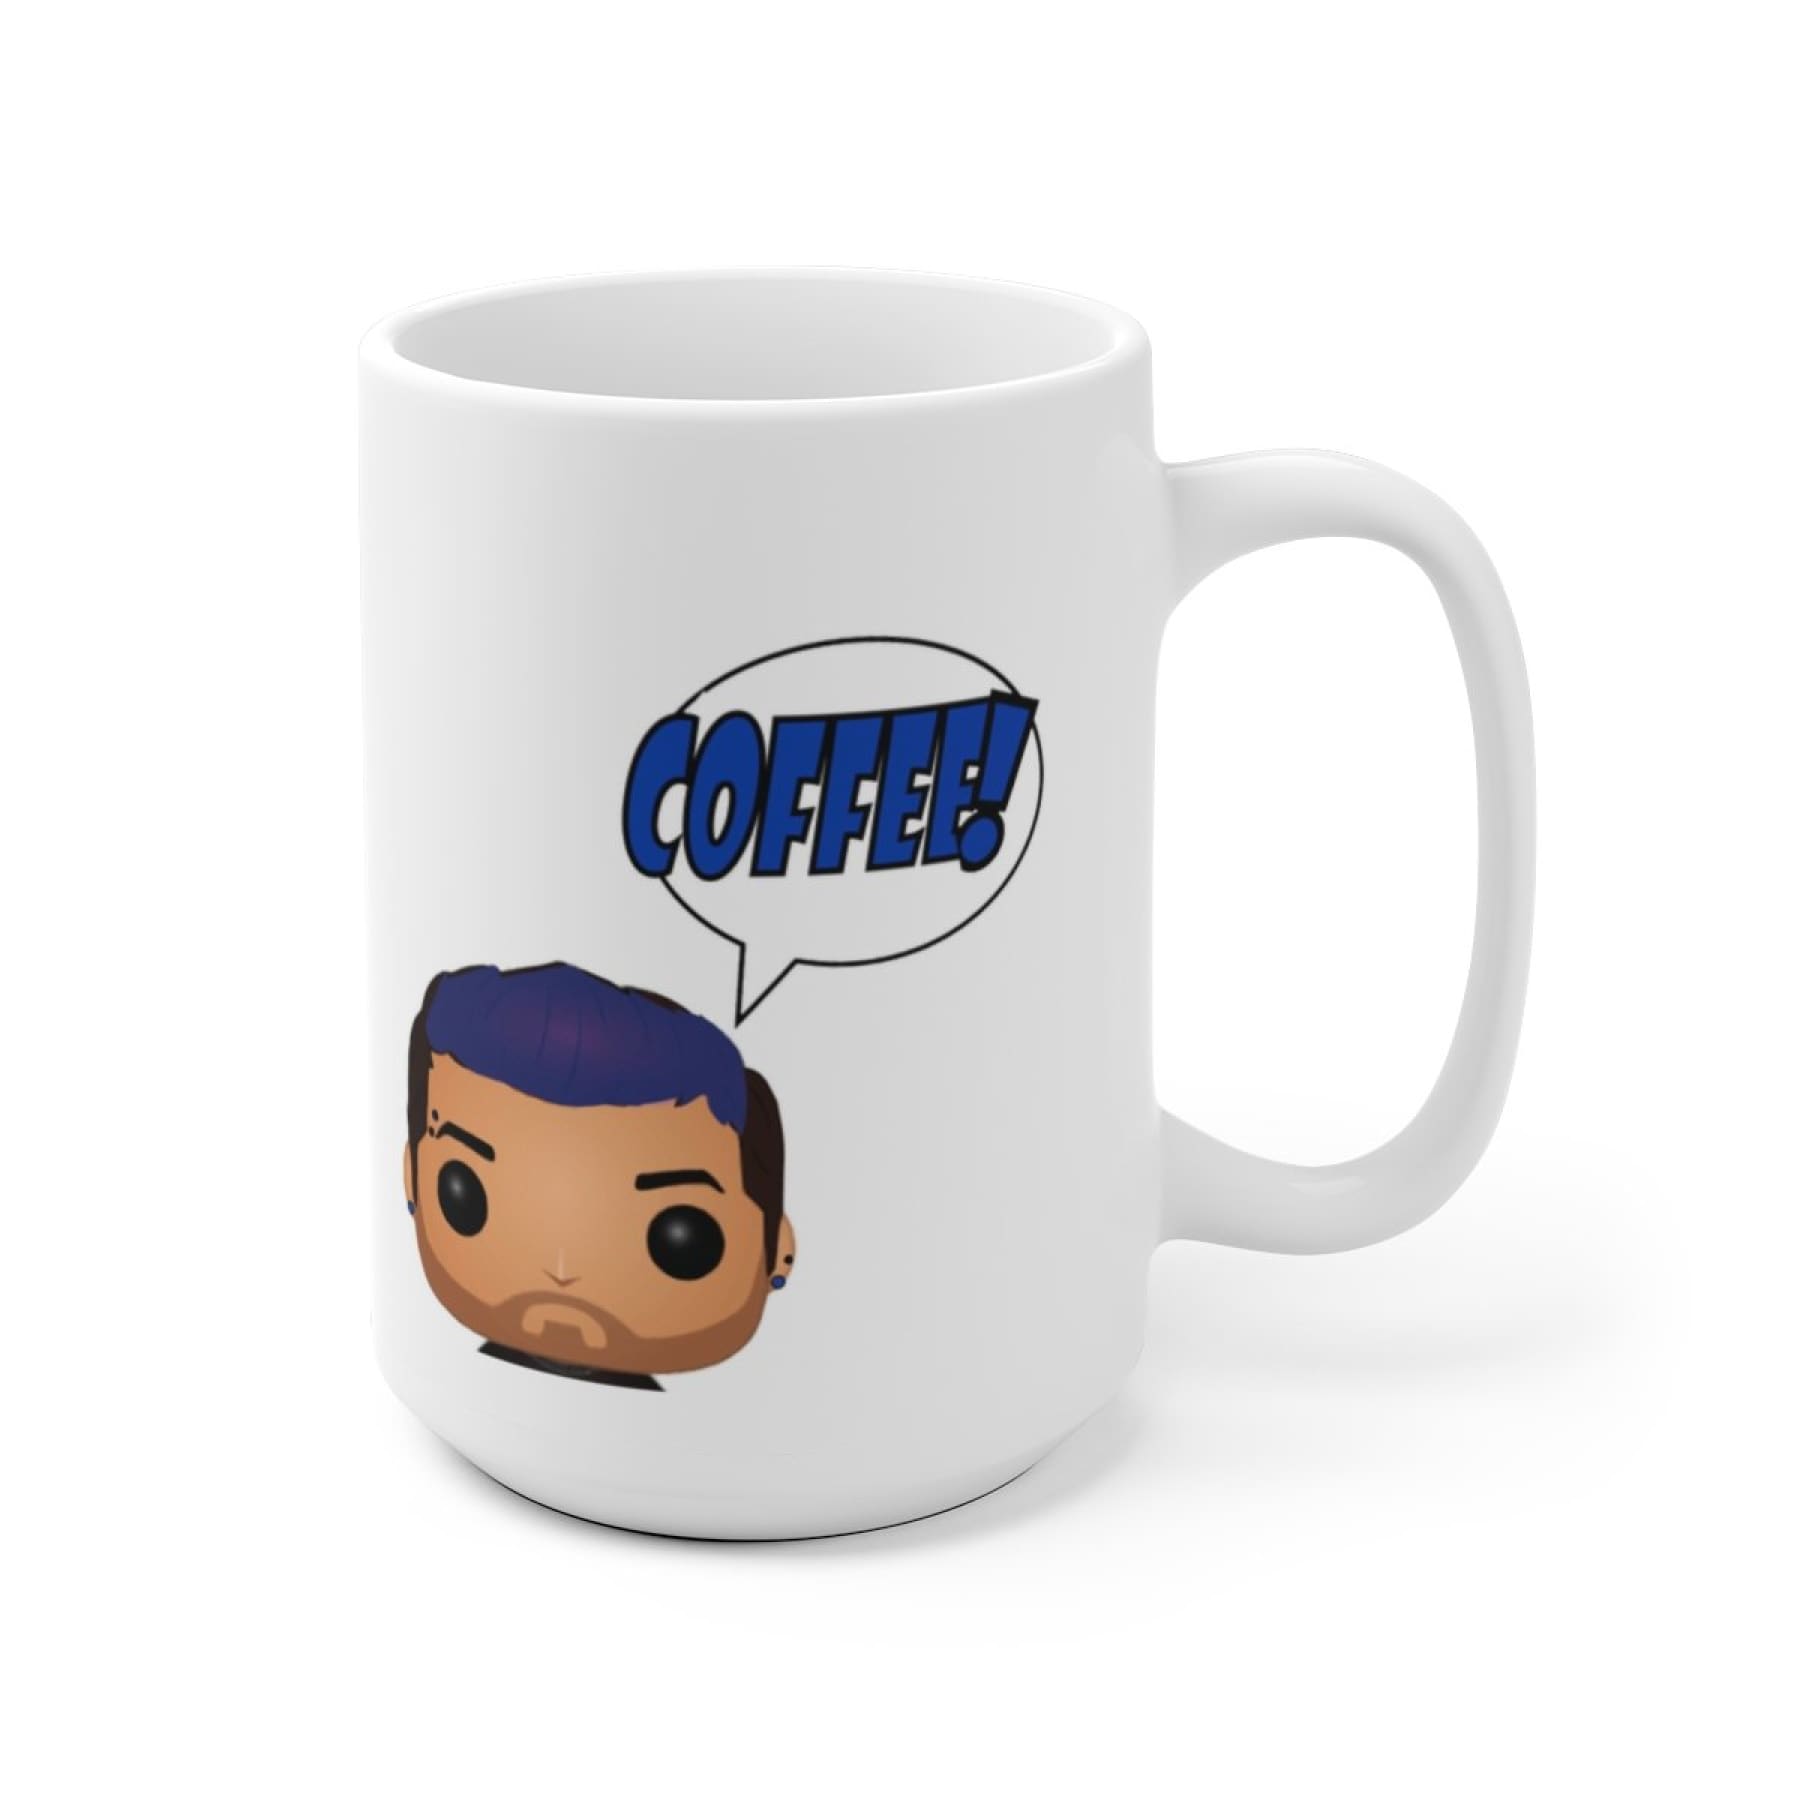 Your Pop on a Coffee Mug